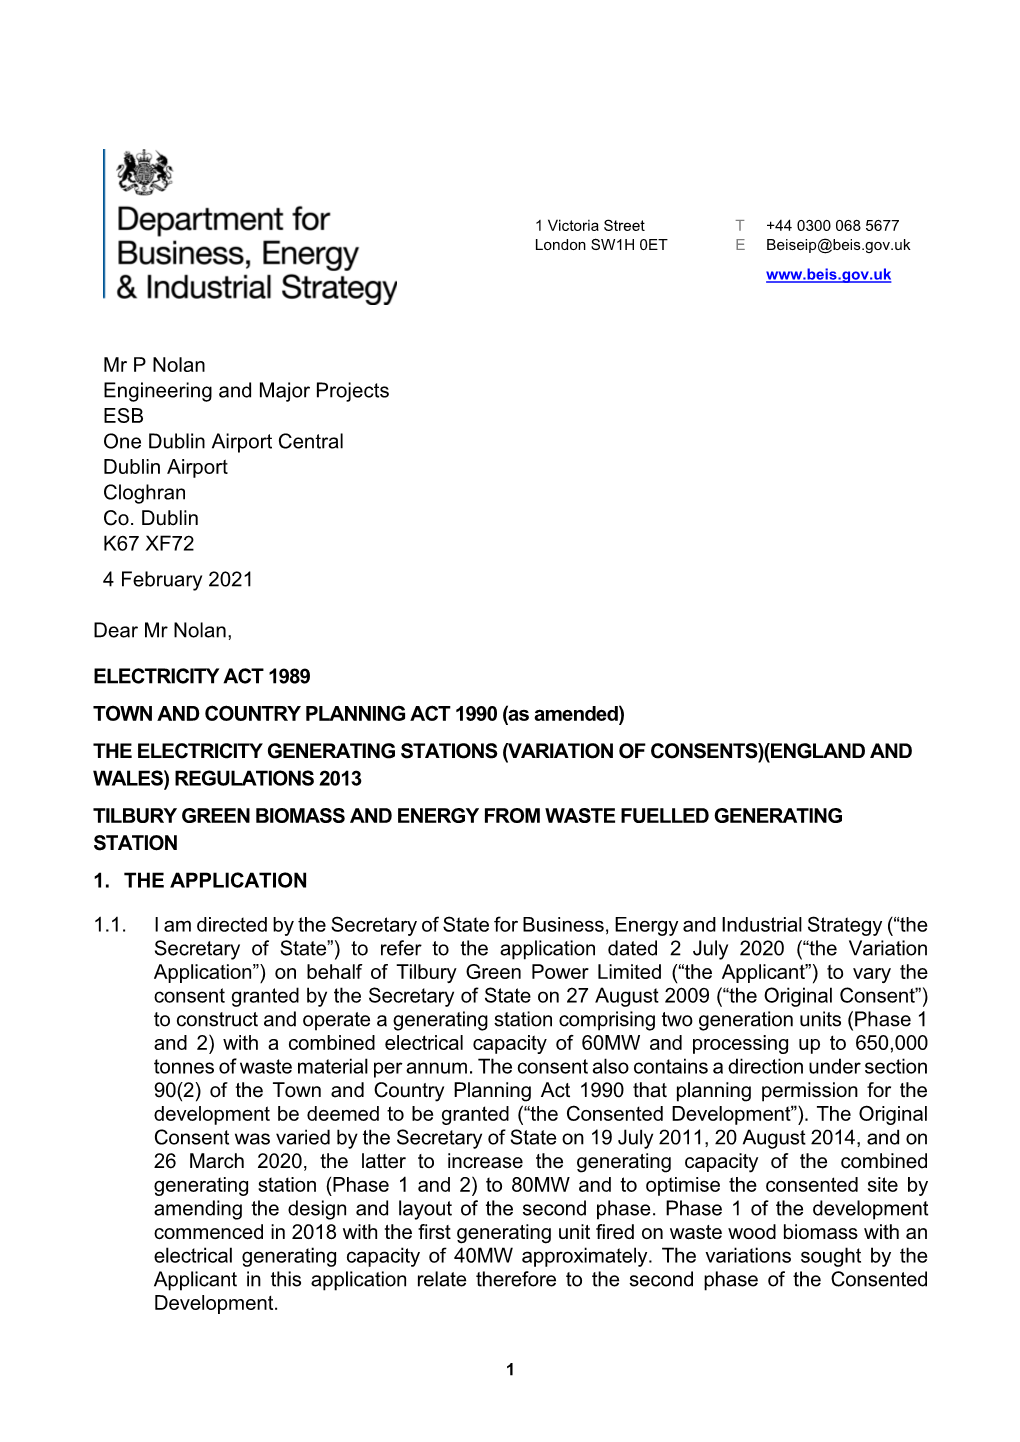 Tilbury Green S36c Variation: 2020 Application: Decision Letter